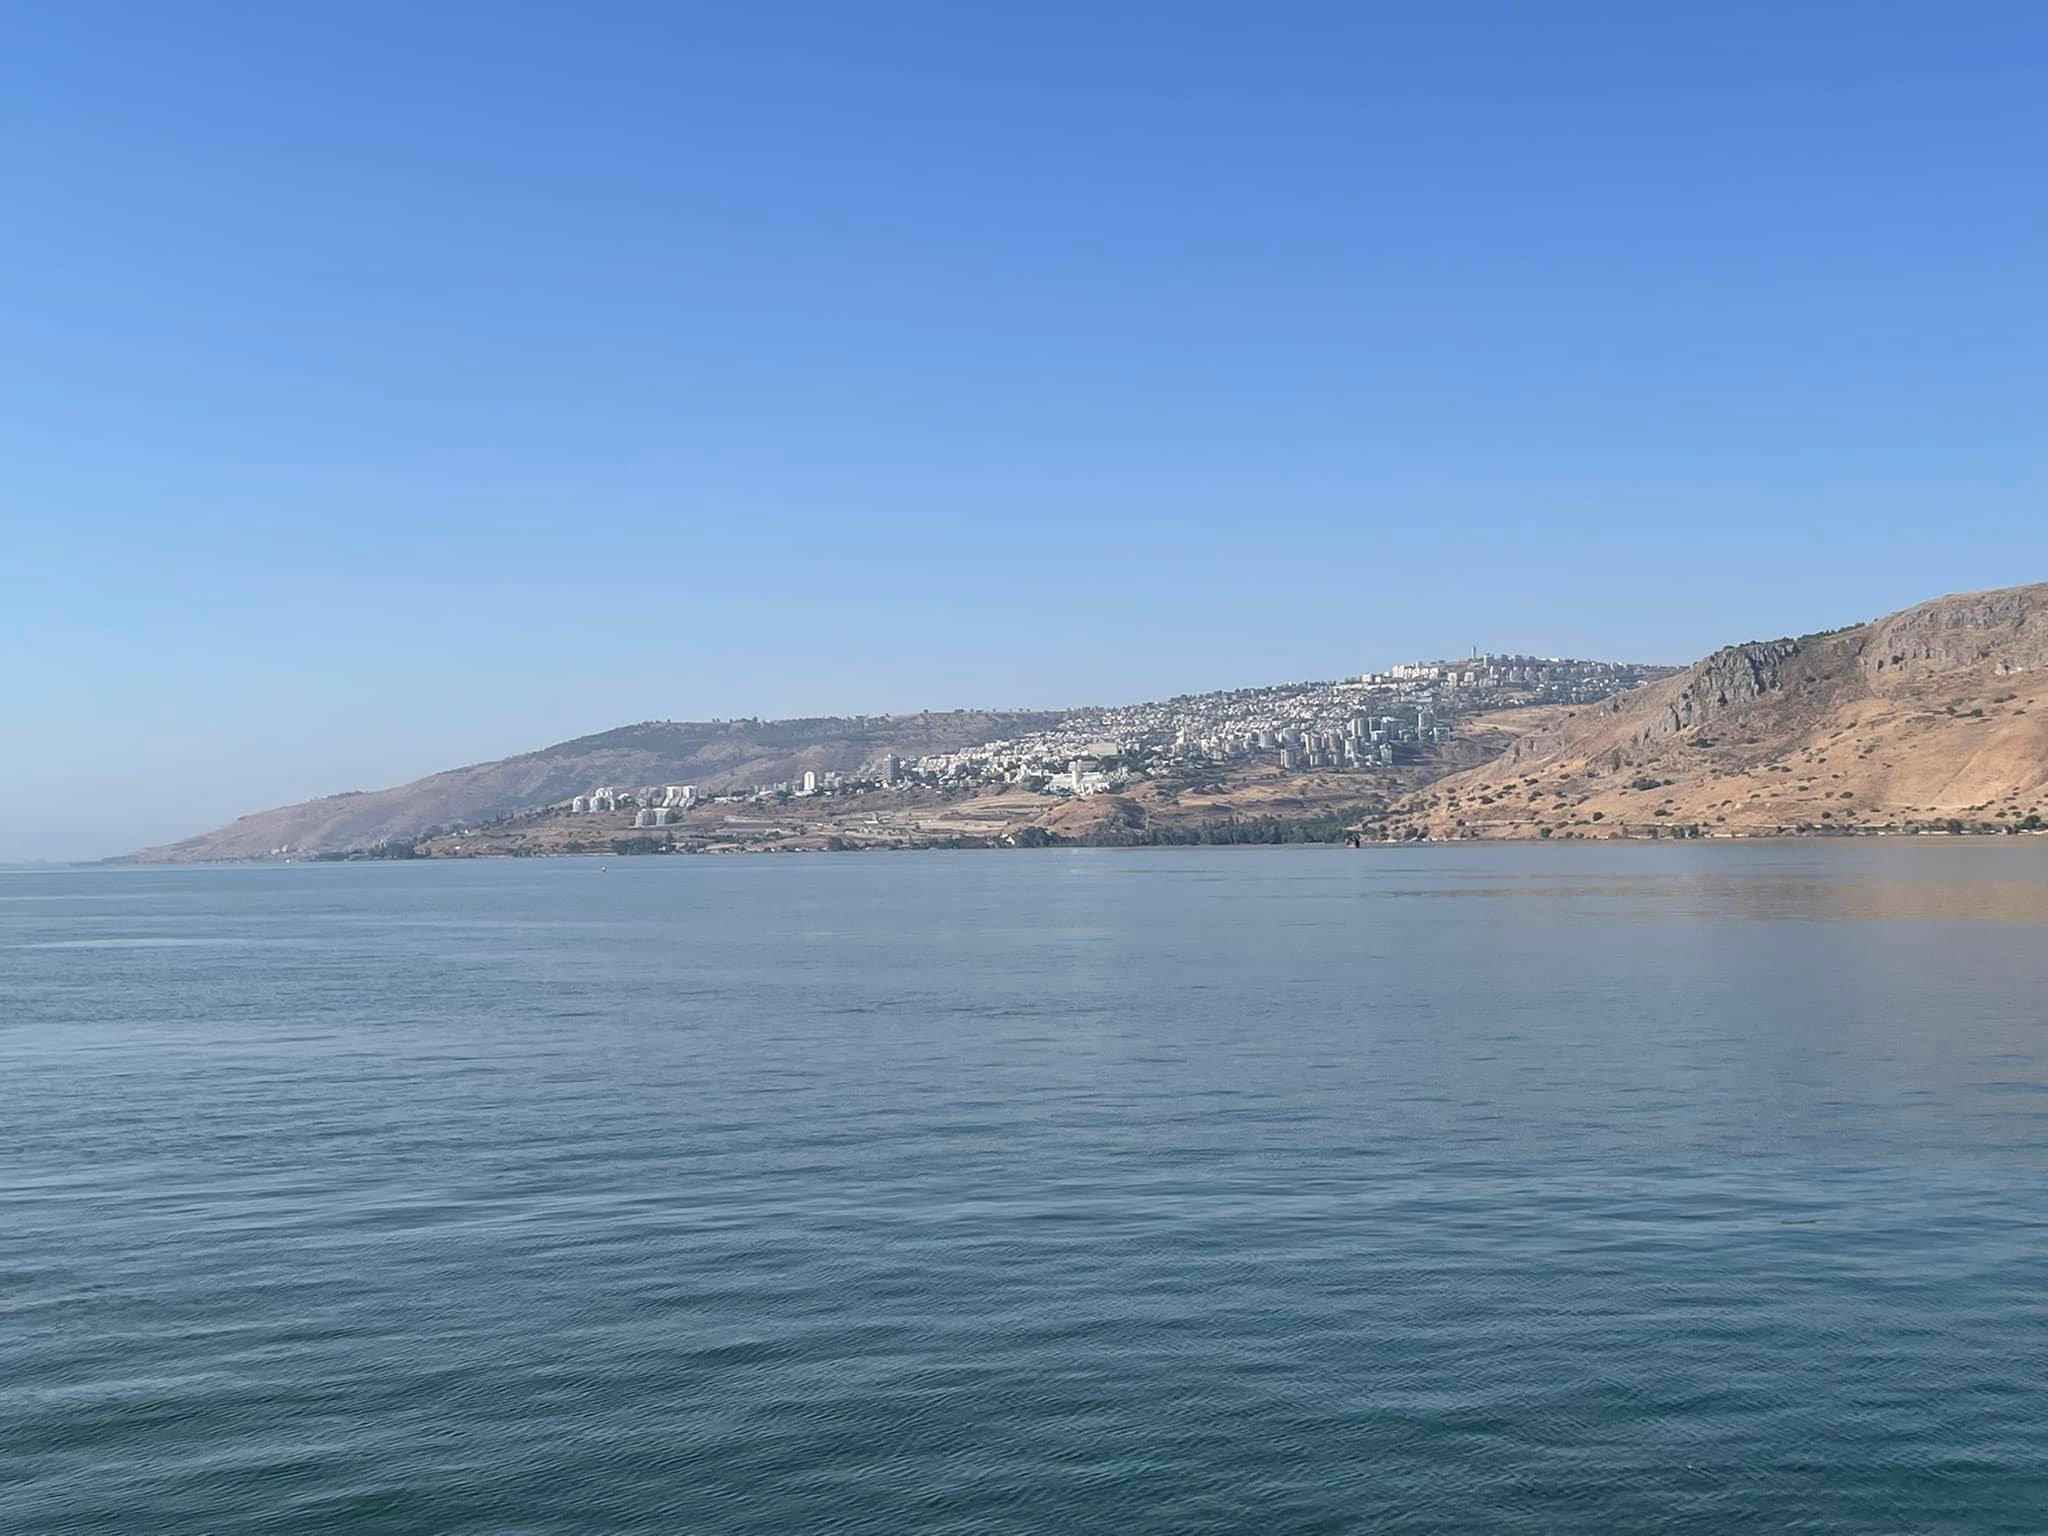  Tiberias from the Sea of Galilee. 